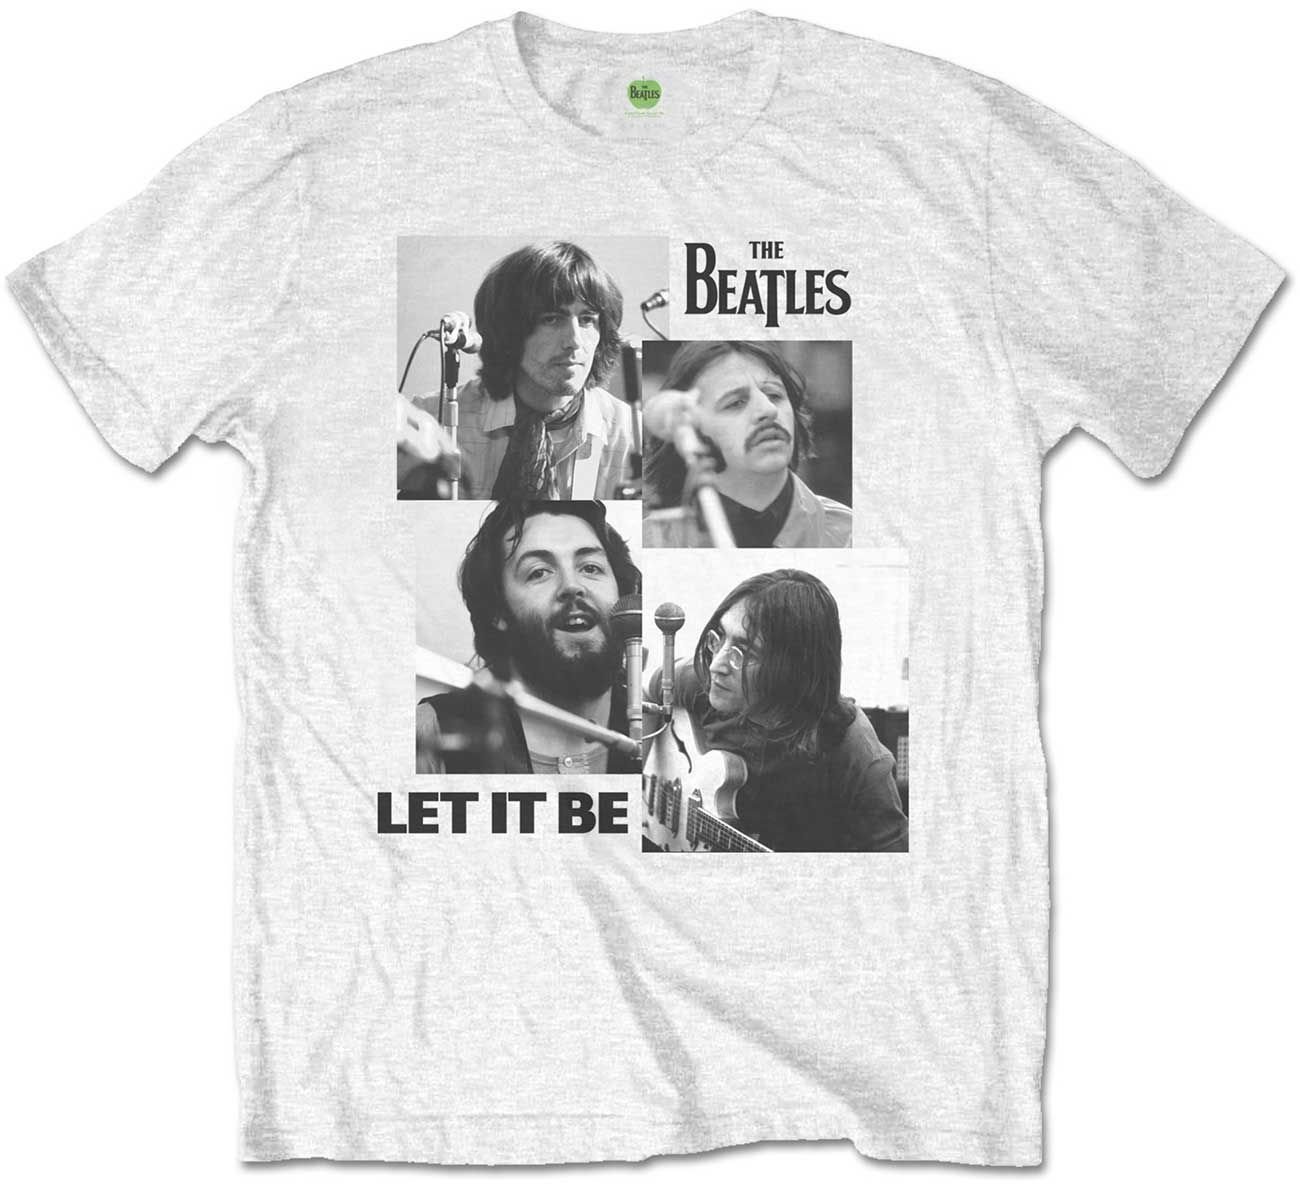 Shirt The Beatles Shirt Let it Be White L